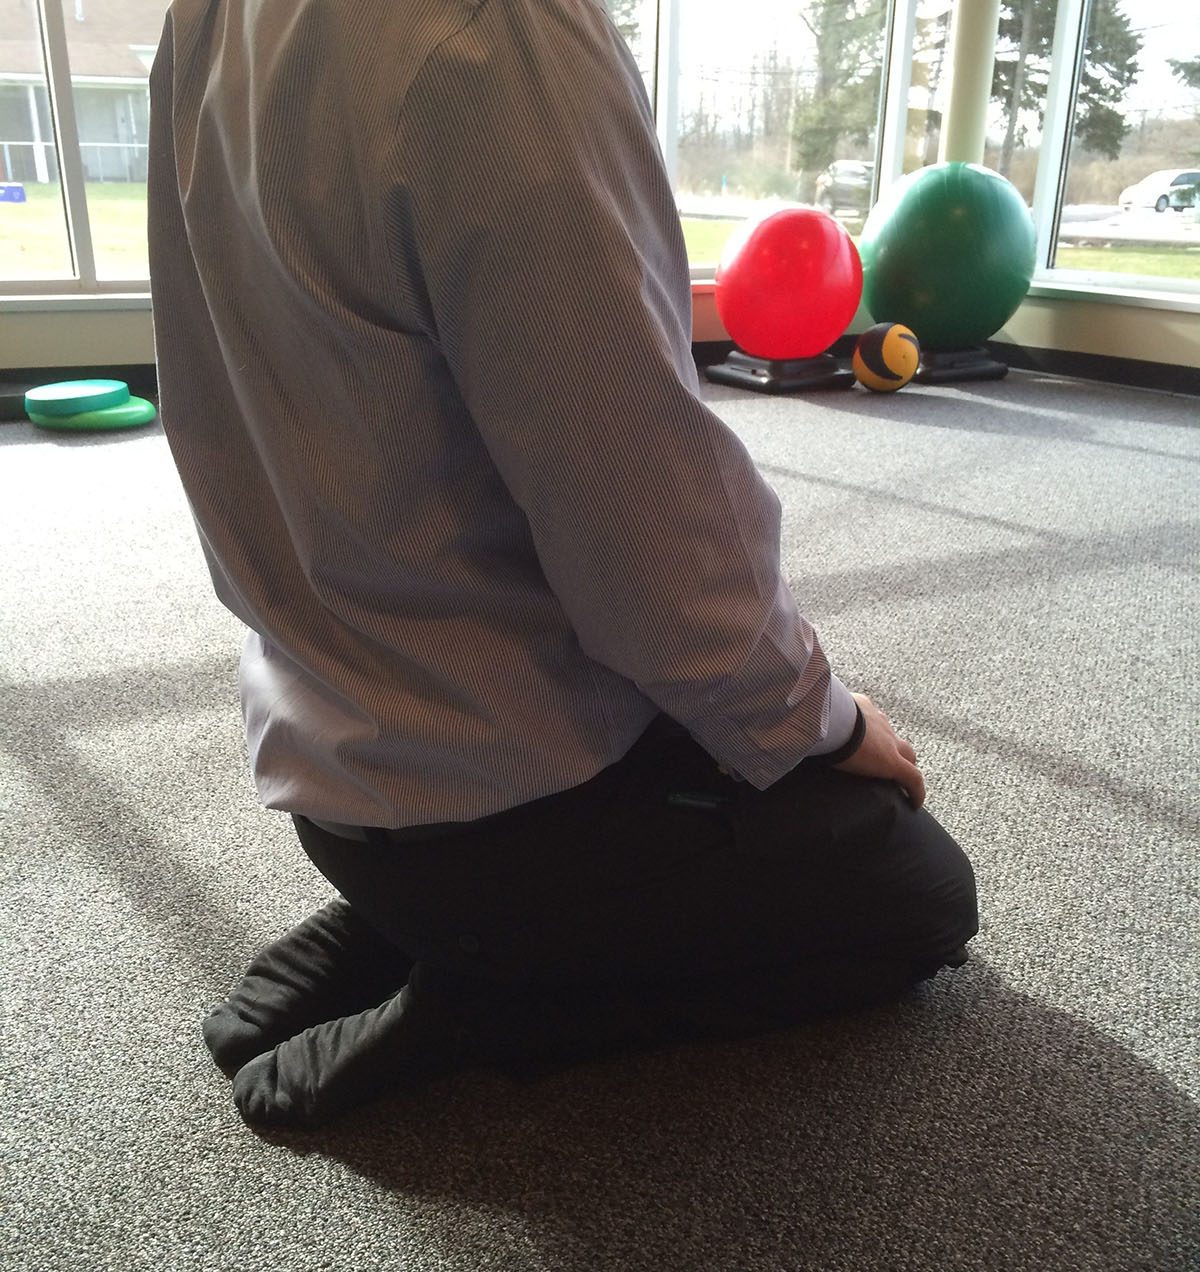 Person kneeling on the floor